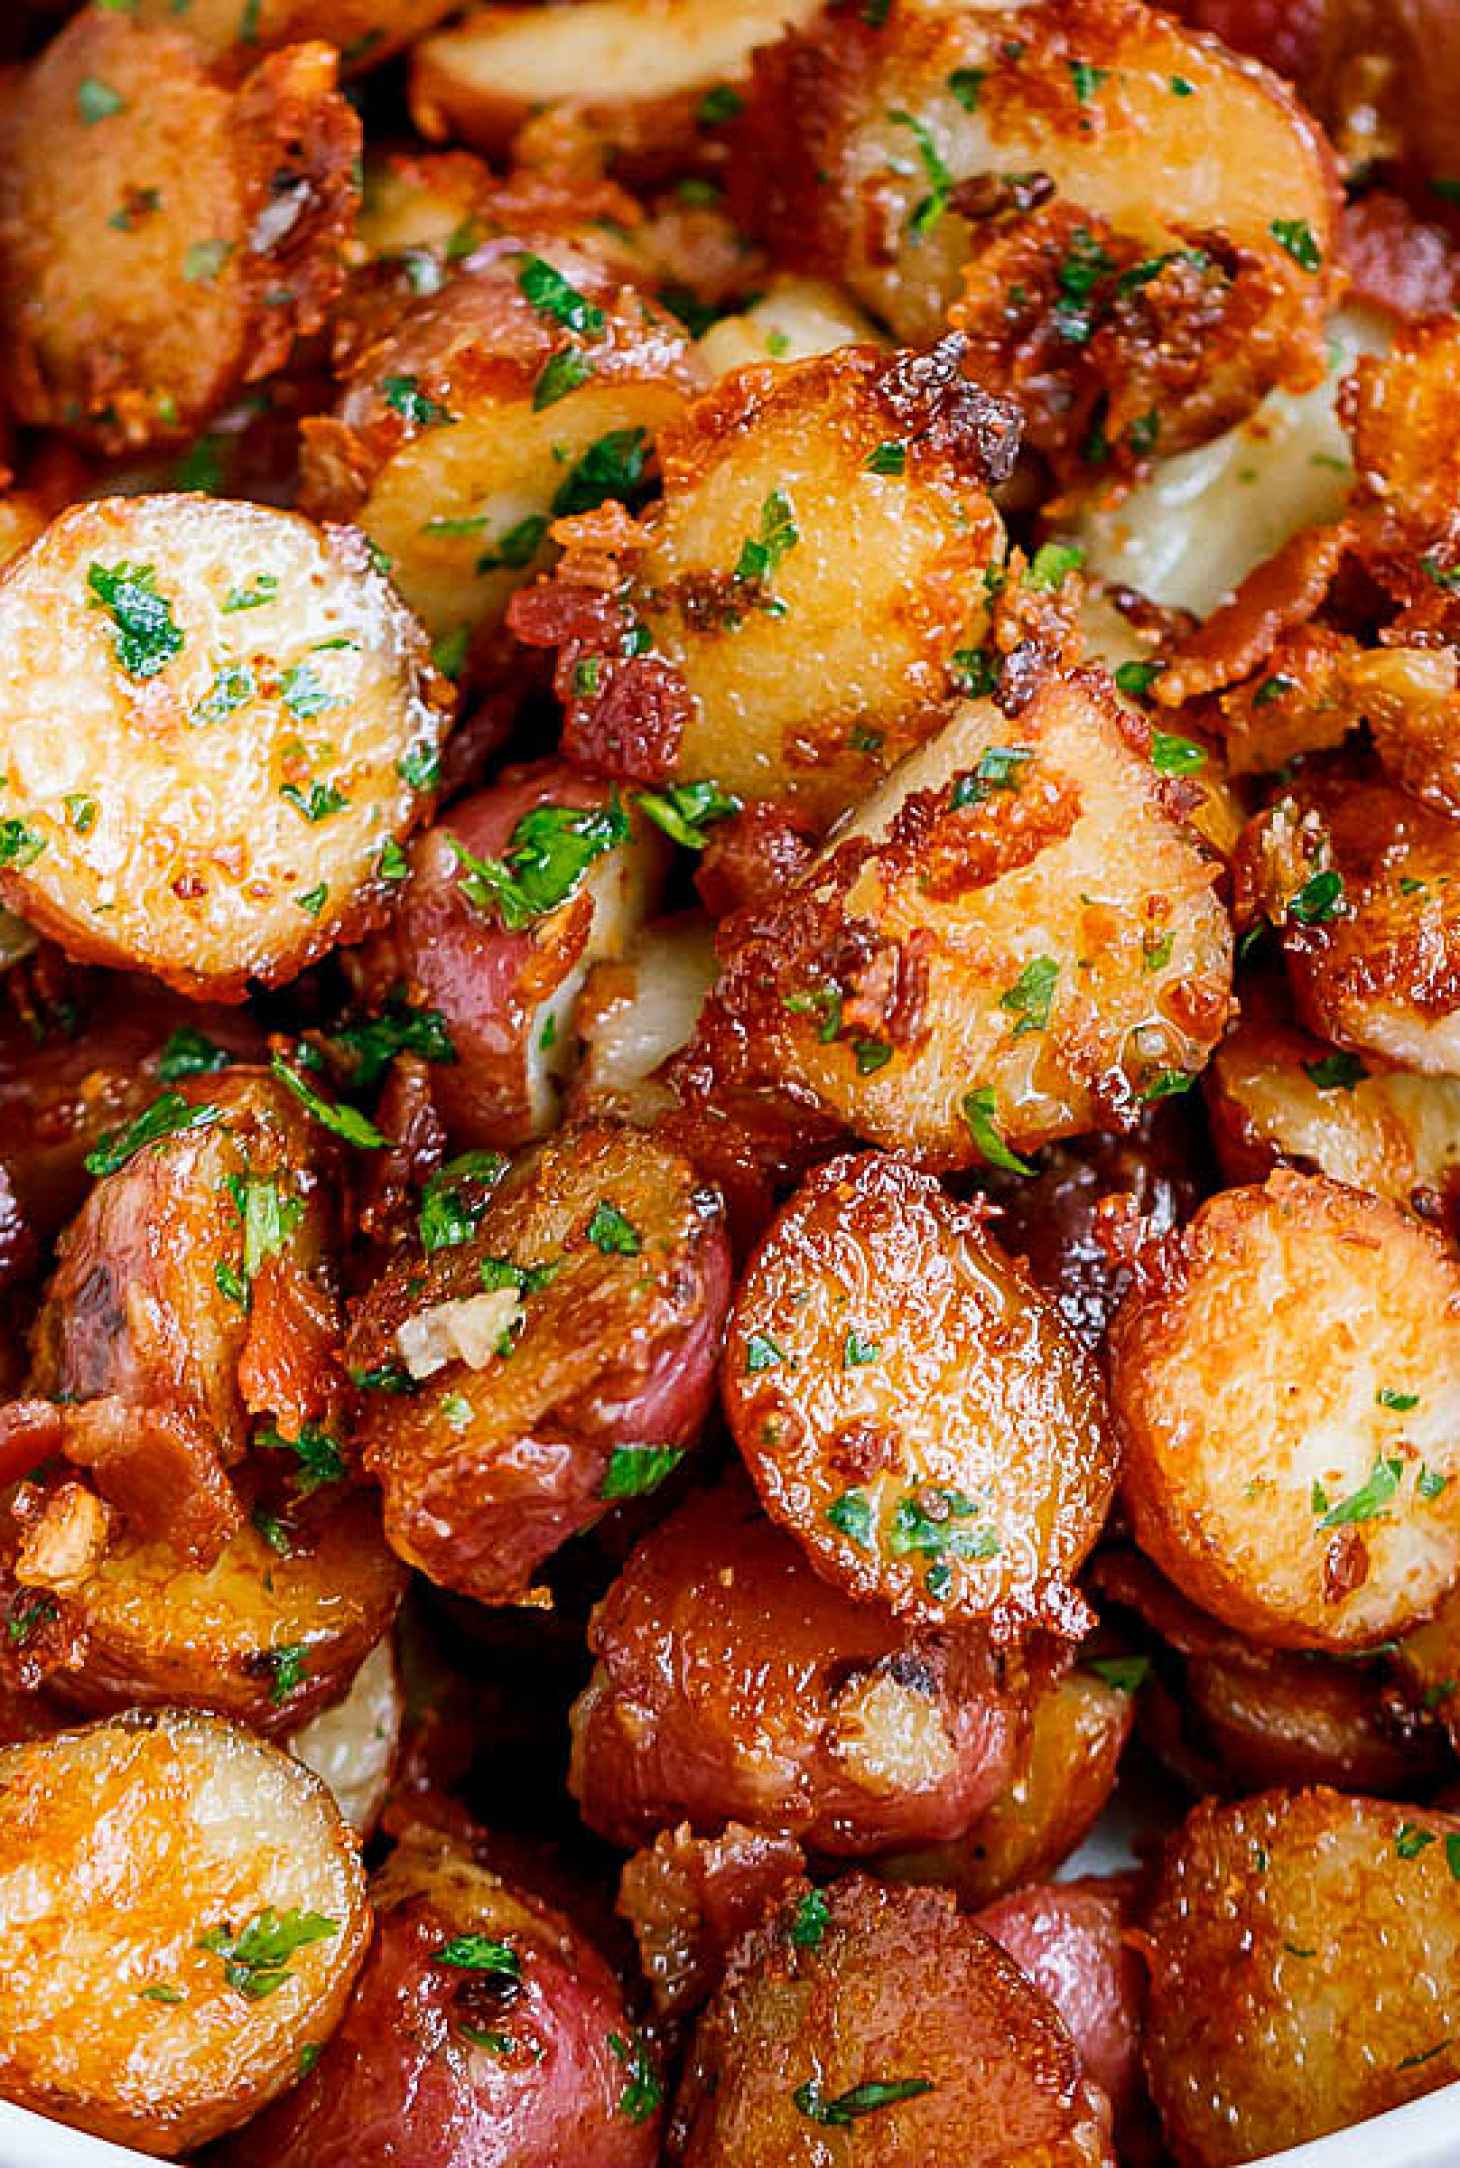 Potato Side Dish Recipes: 12 of the Best Potato Recipes — Eatwell101